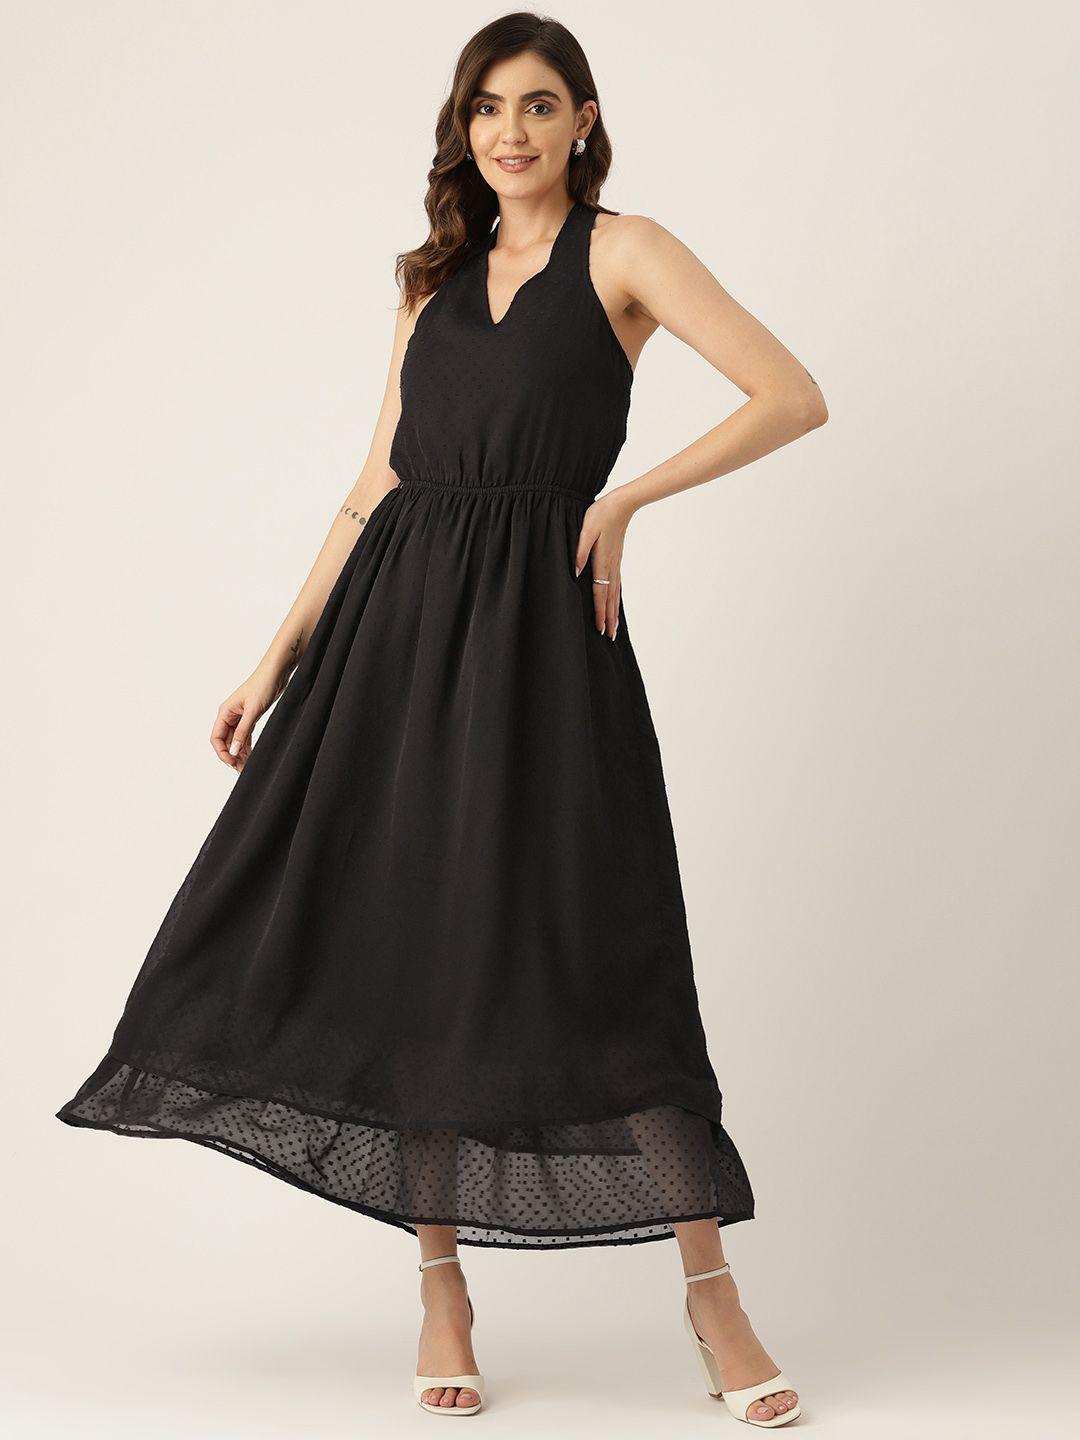 label regalia black chiffon a-line dress